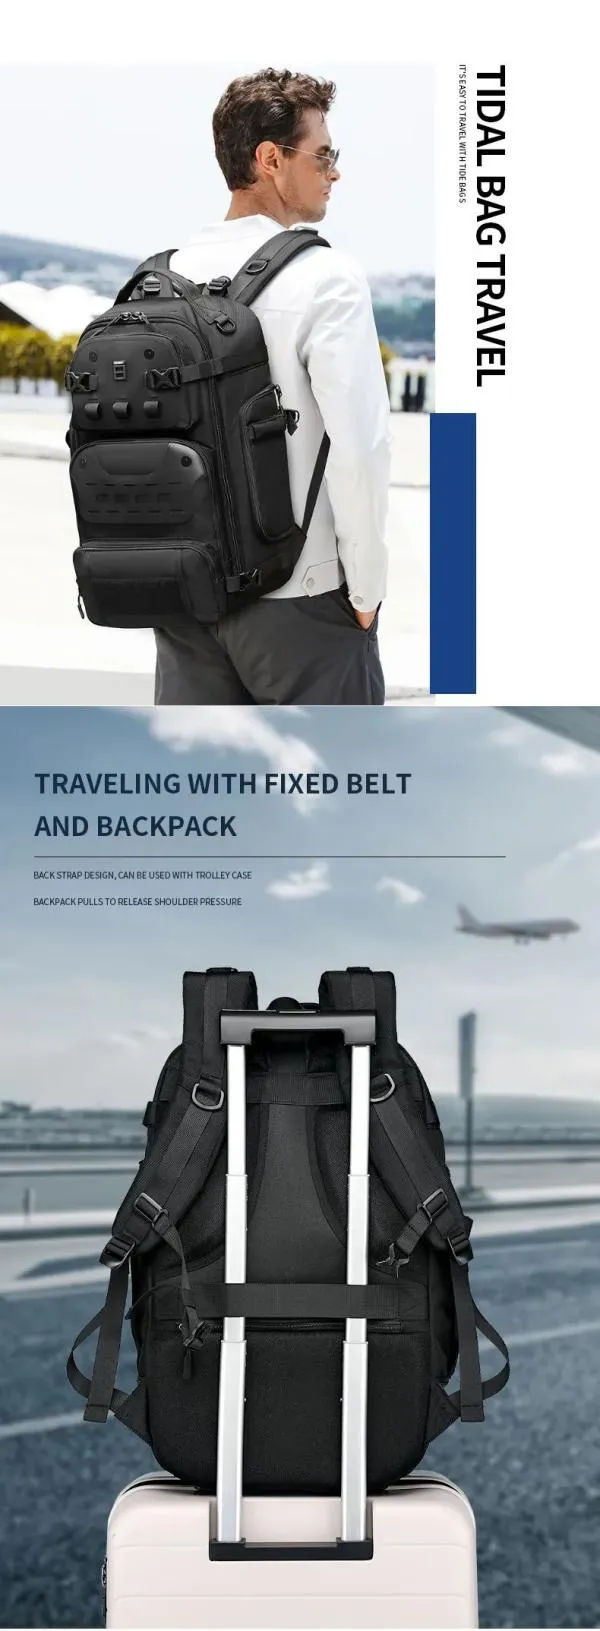 Ozuko 9590 L Multifunctional Waterproof Anti Theft Travel Backpack (2)